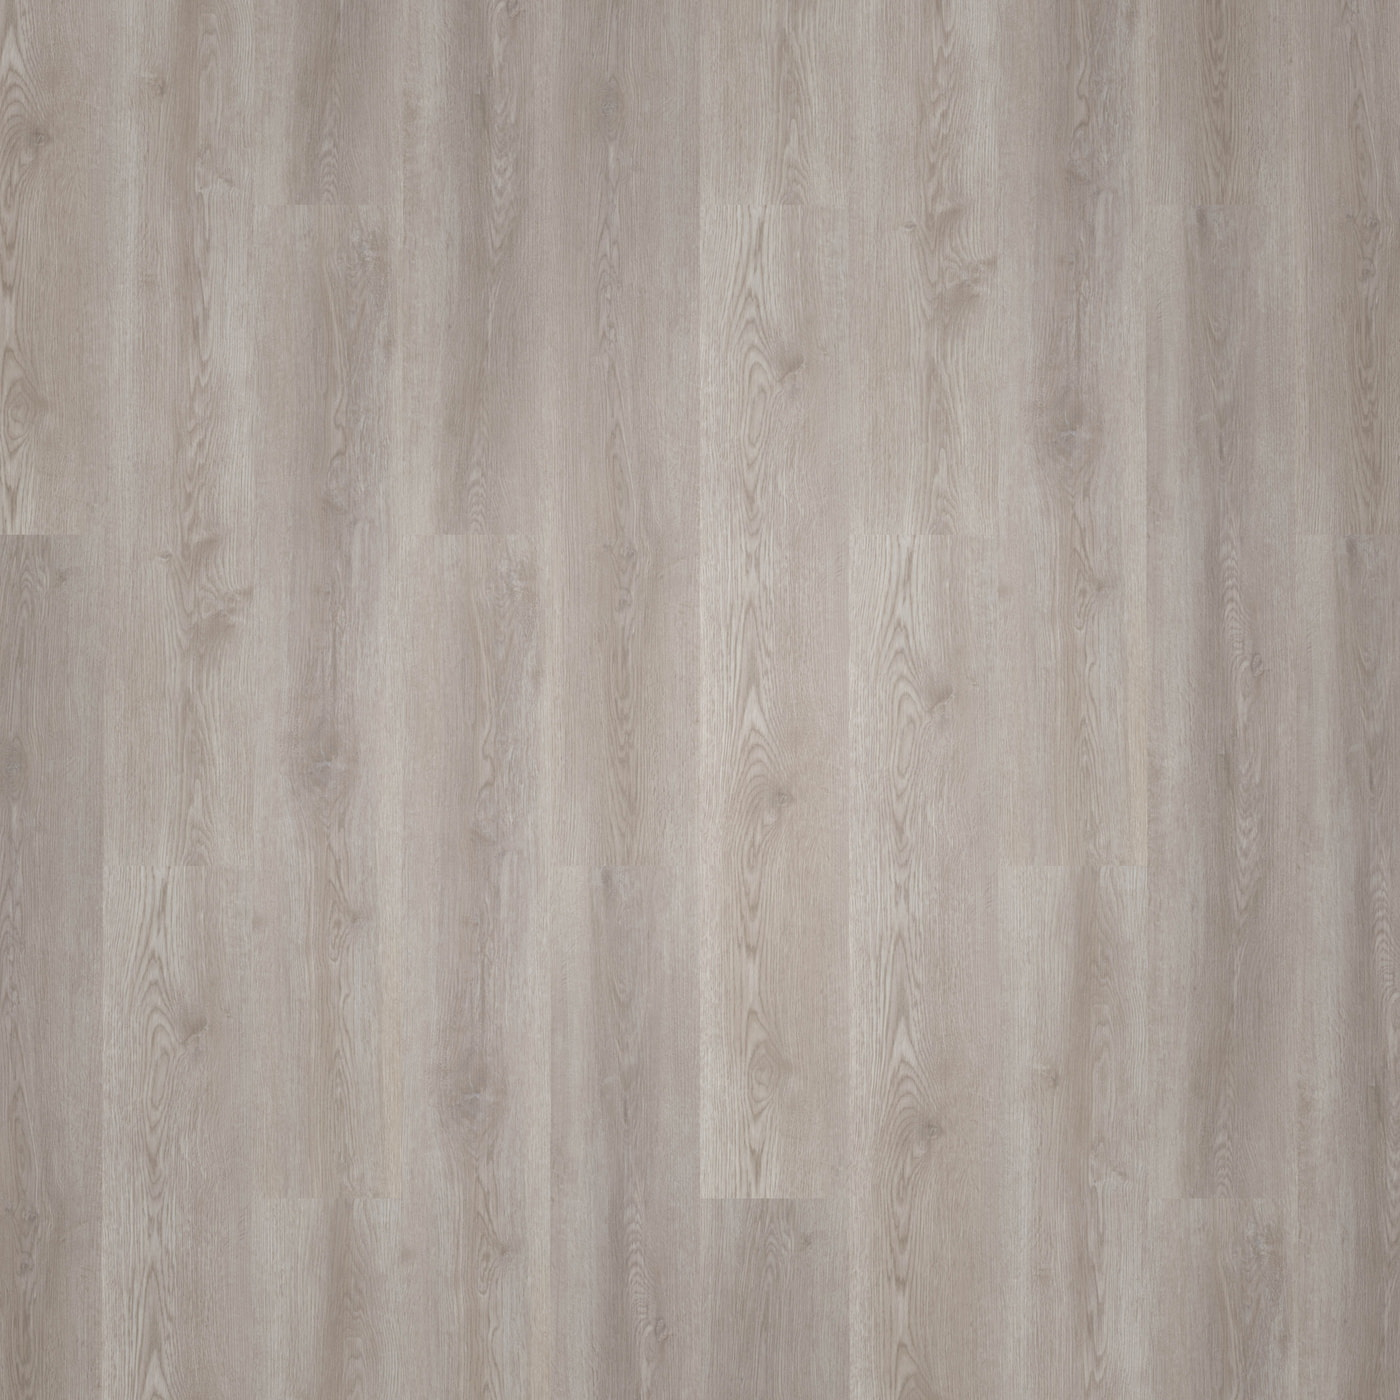 wineo Klebe-Vinyl wineo 600 wood ElegantPlace Exklusive Holzstruktur